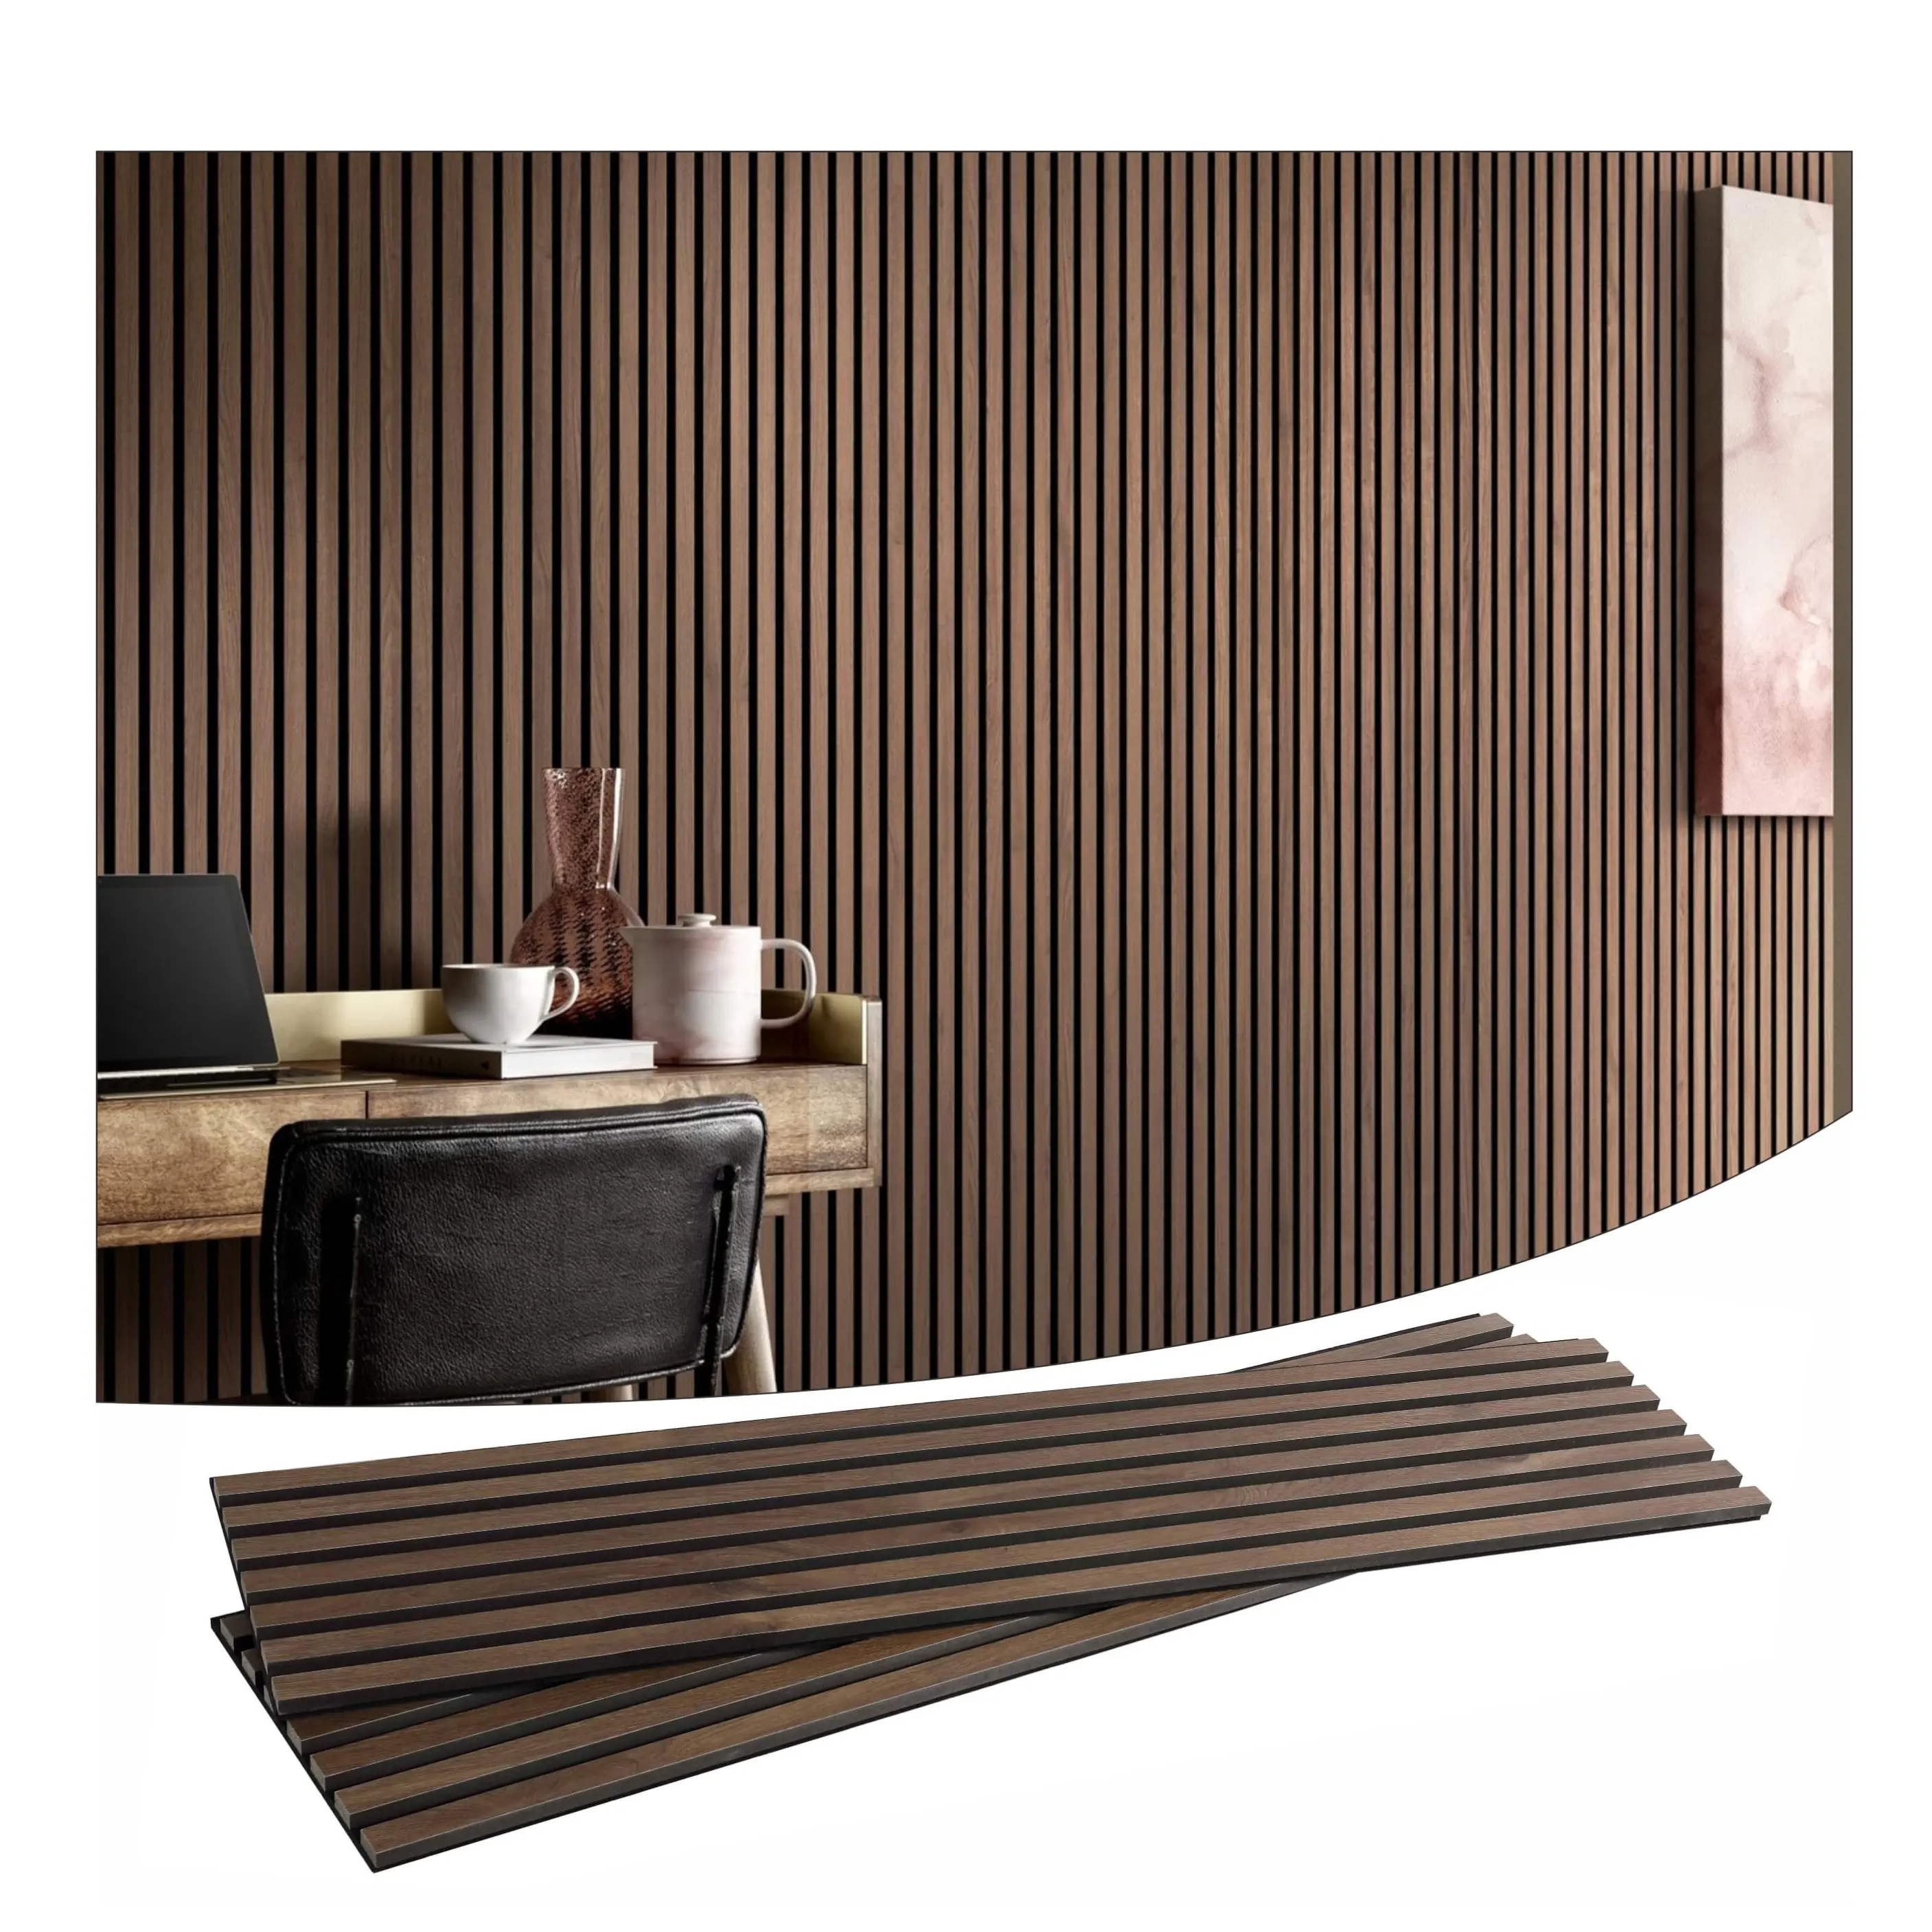 Best Fireproof Waterproof Acoustic Slat Wall Panel Wood Veneer Panel 3D Decorative Slats Acoustic Panels For Interior Wall Deco